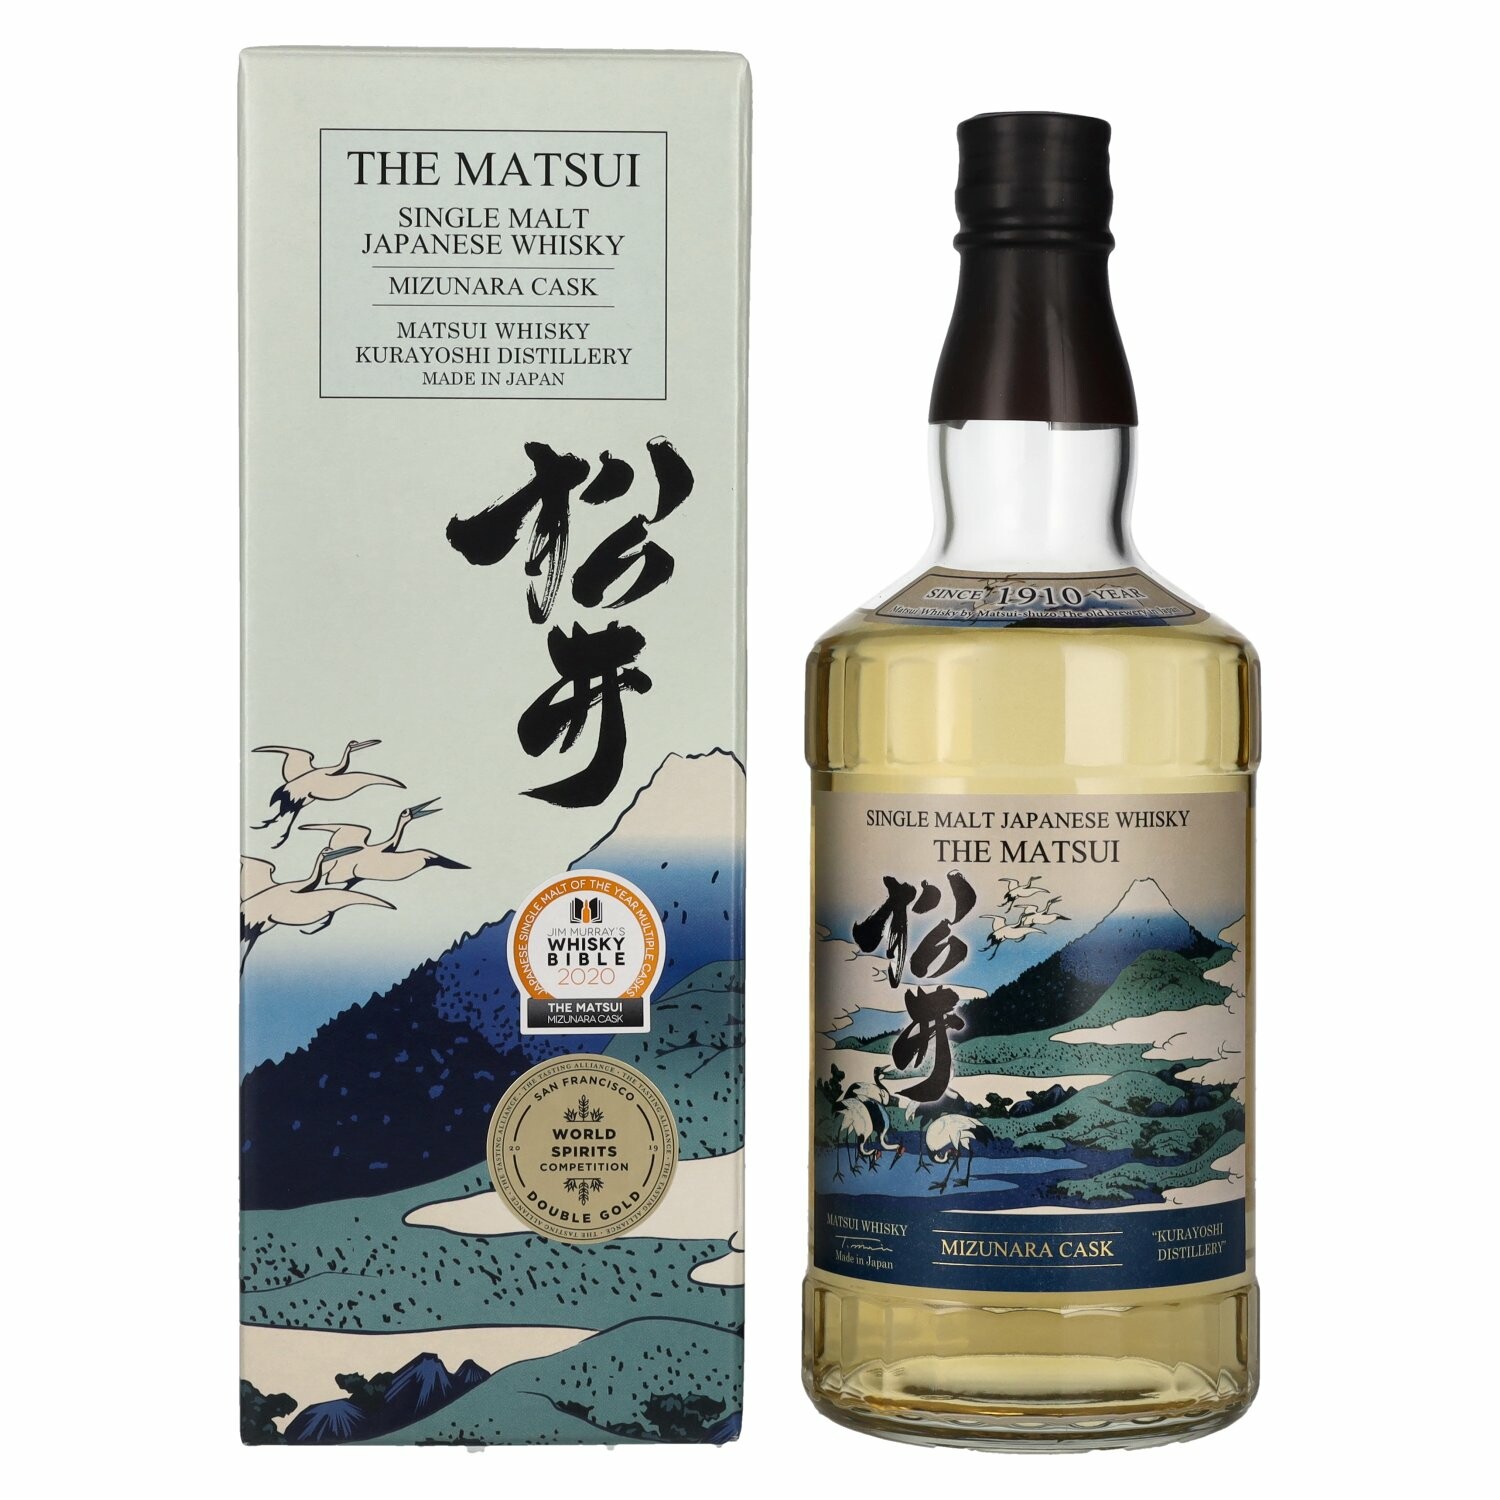 Matsui Whisky THE MATSUI Single Malt Japanese Whisky MIZUNARA CASK 48% Vol. 0,7l in Giftbox